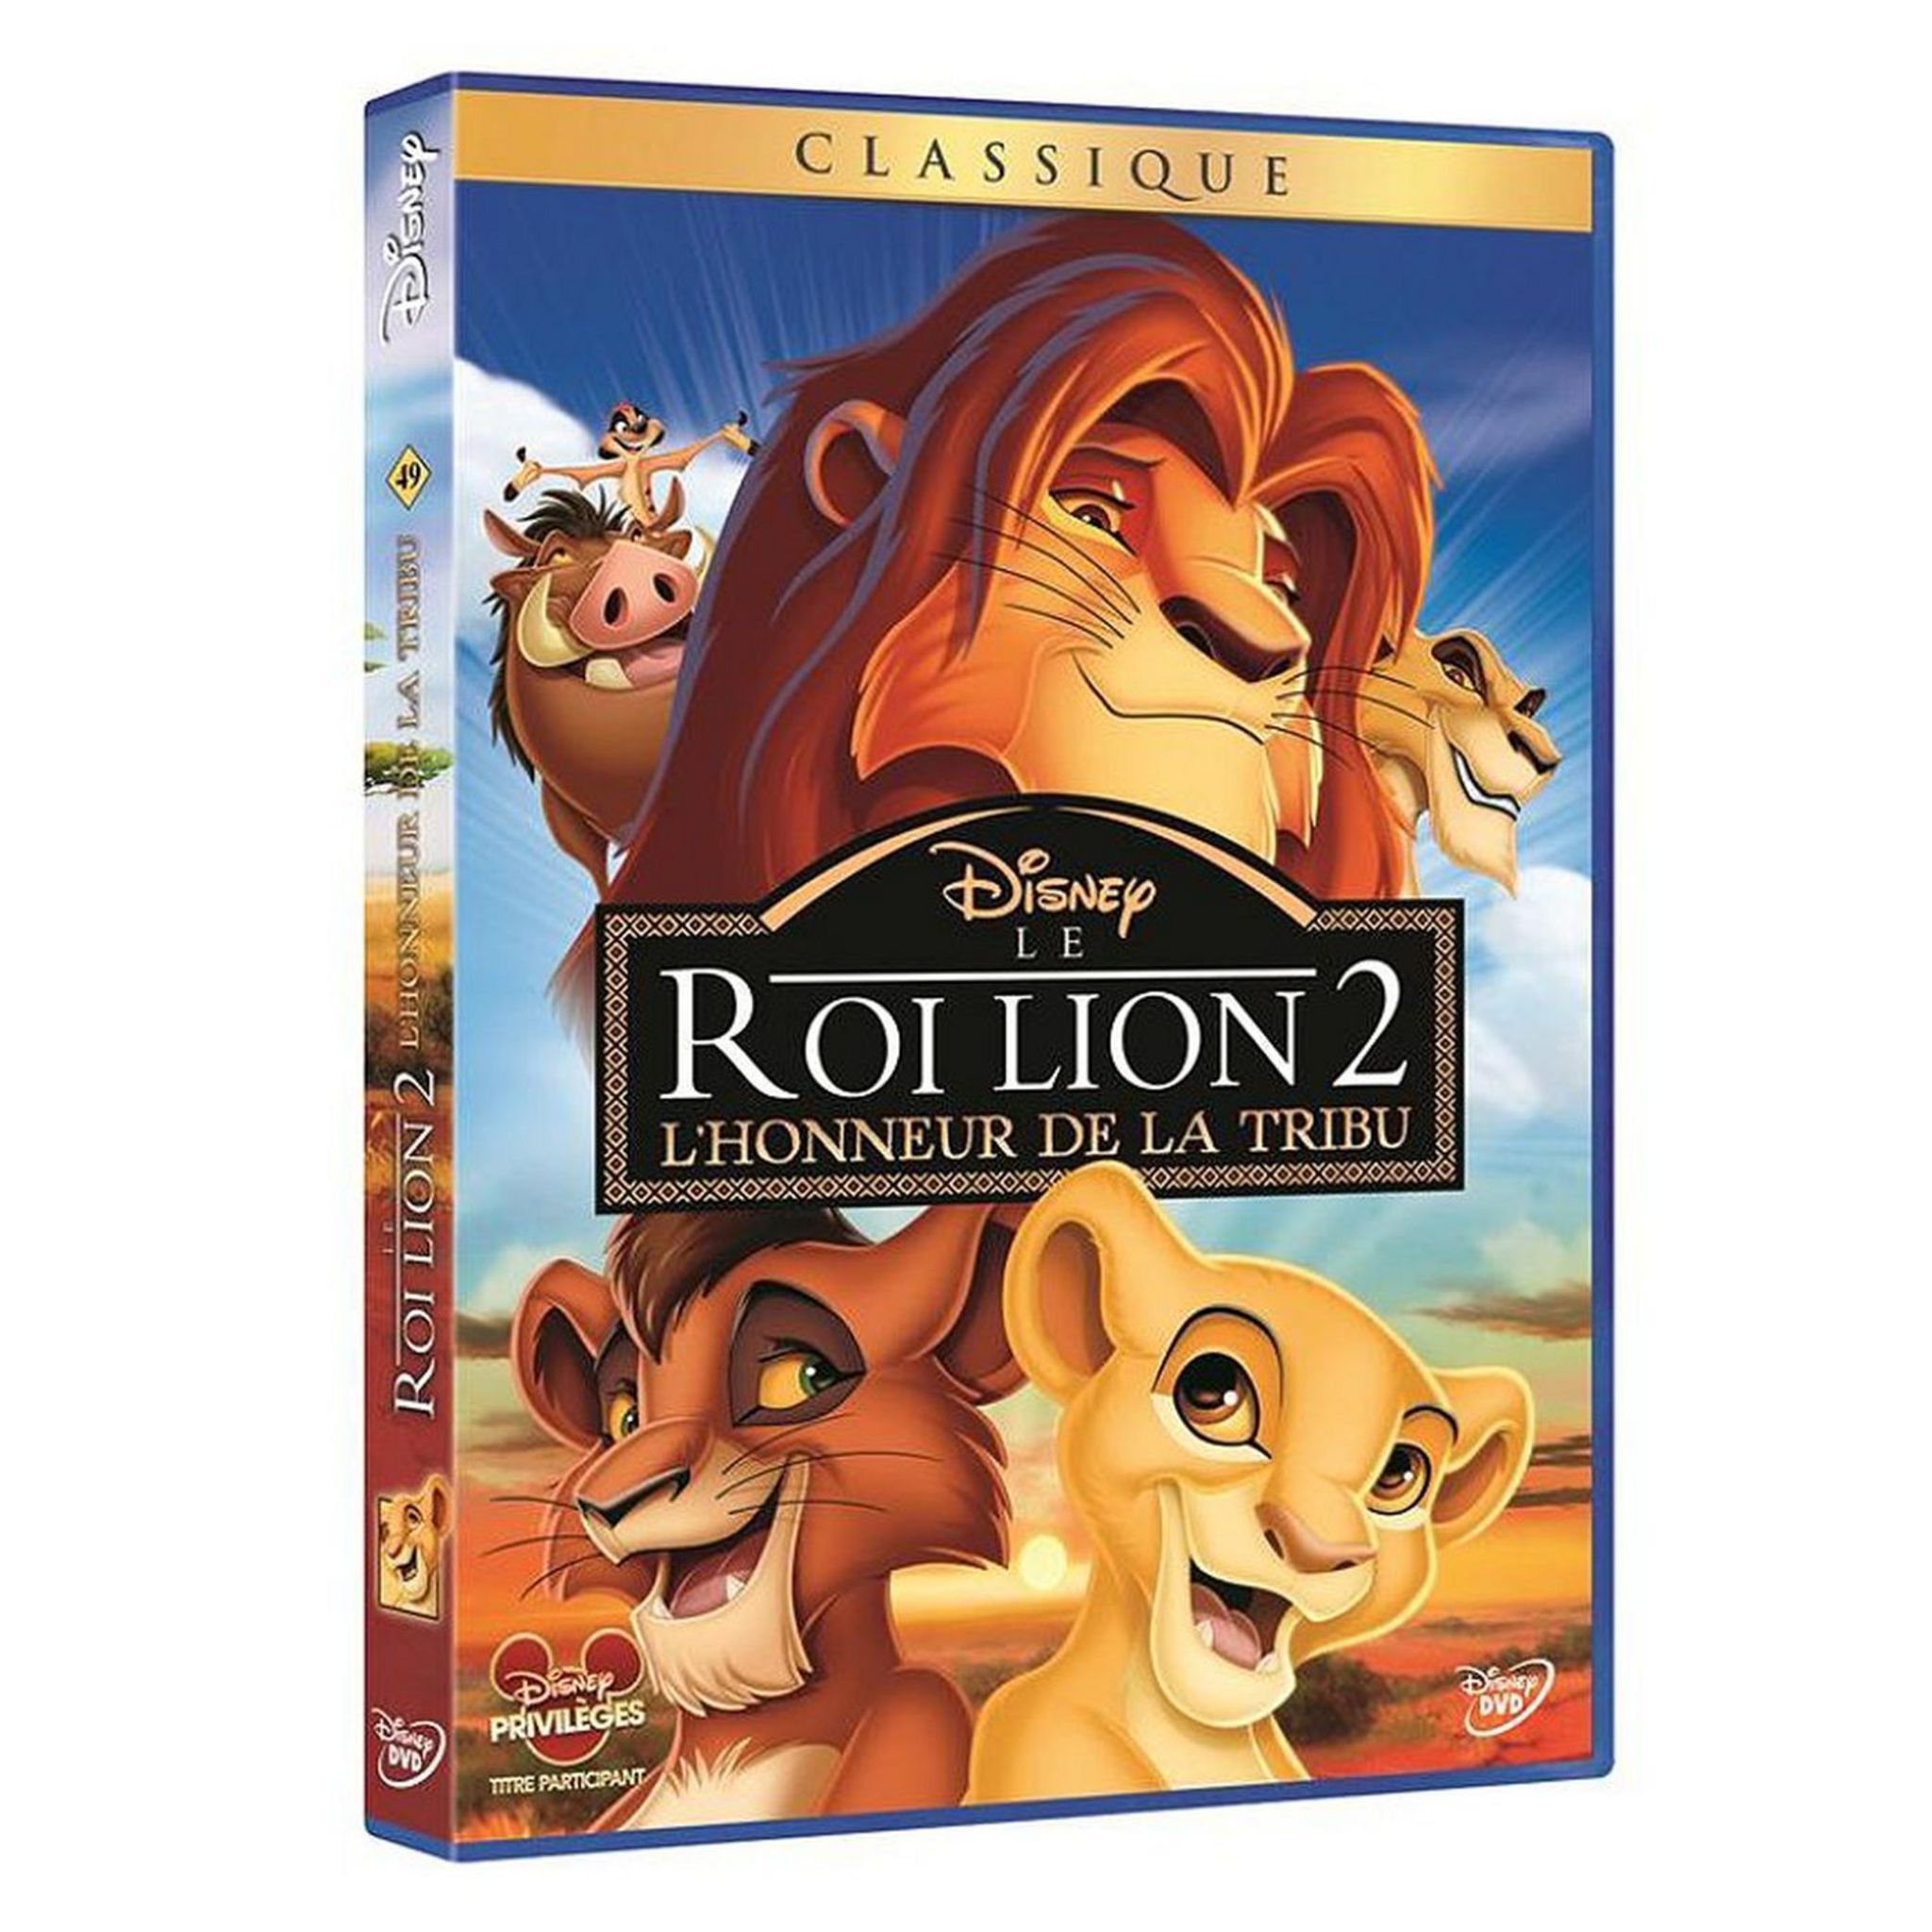 Новые игры симба. The Lion King 2 Simba's Pride DVD. Обложка the Lion King 2 Simba s Pride. The Lion King 2 Simba's Pride DVD menu Walkthrough. The Lion King II: Simba's Pride DVD menu.